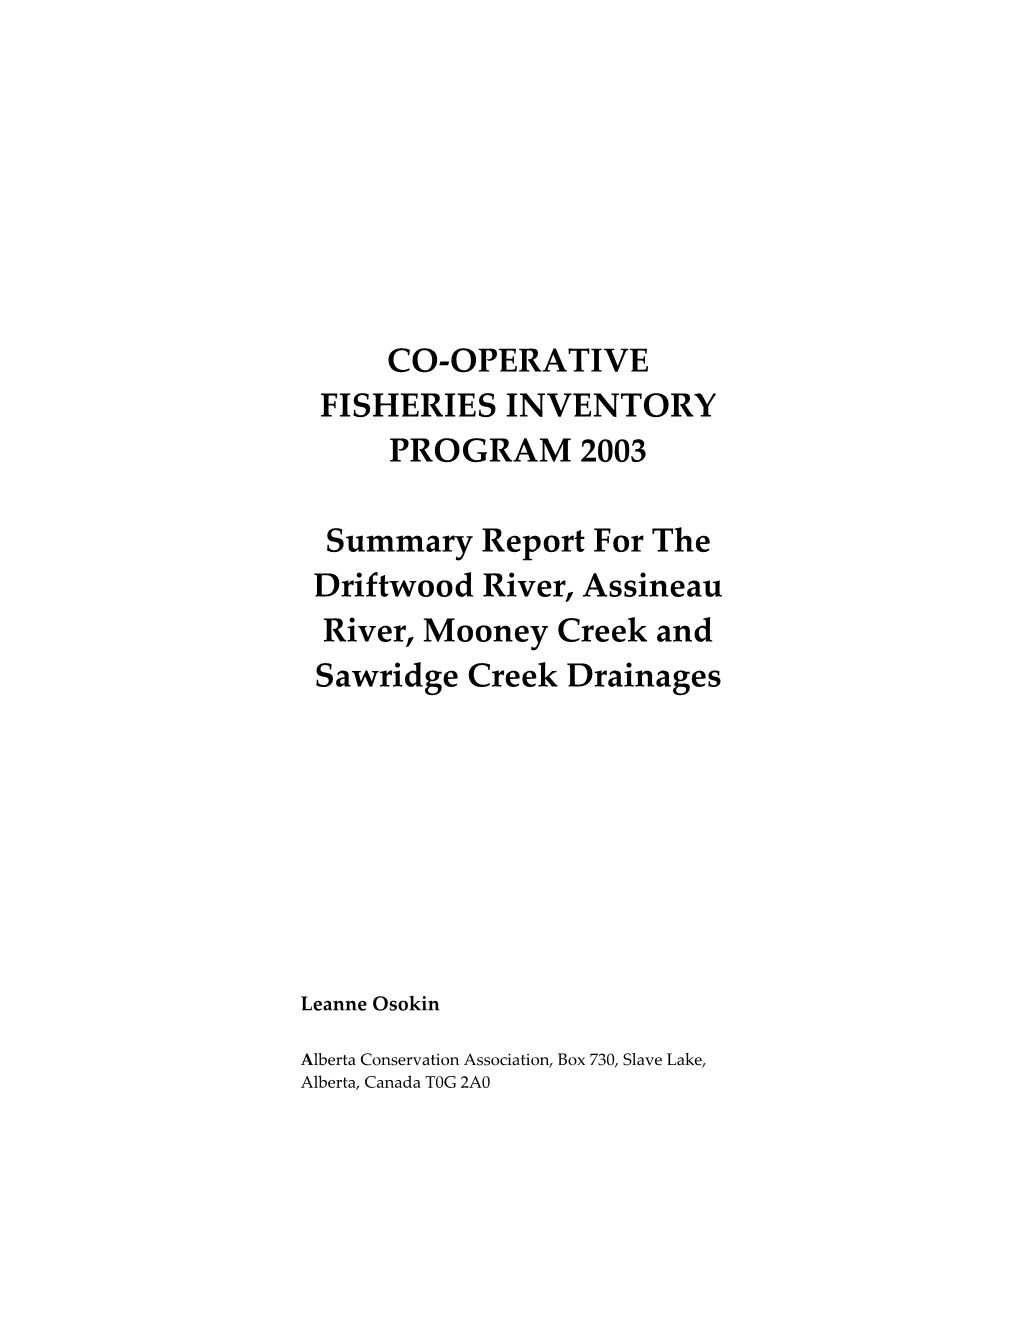 Co-Operative Fisheries Inventory Program 2003